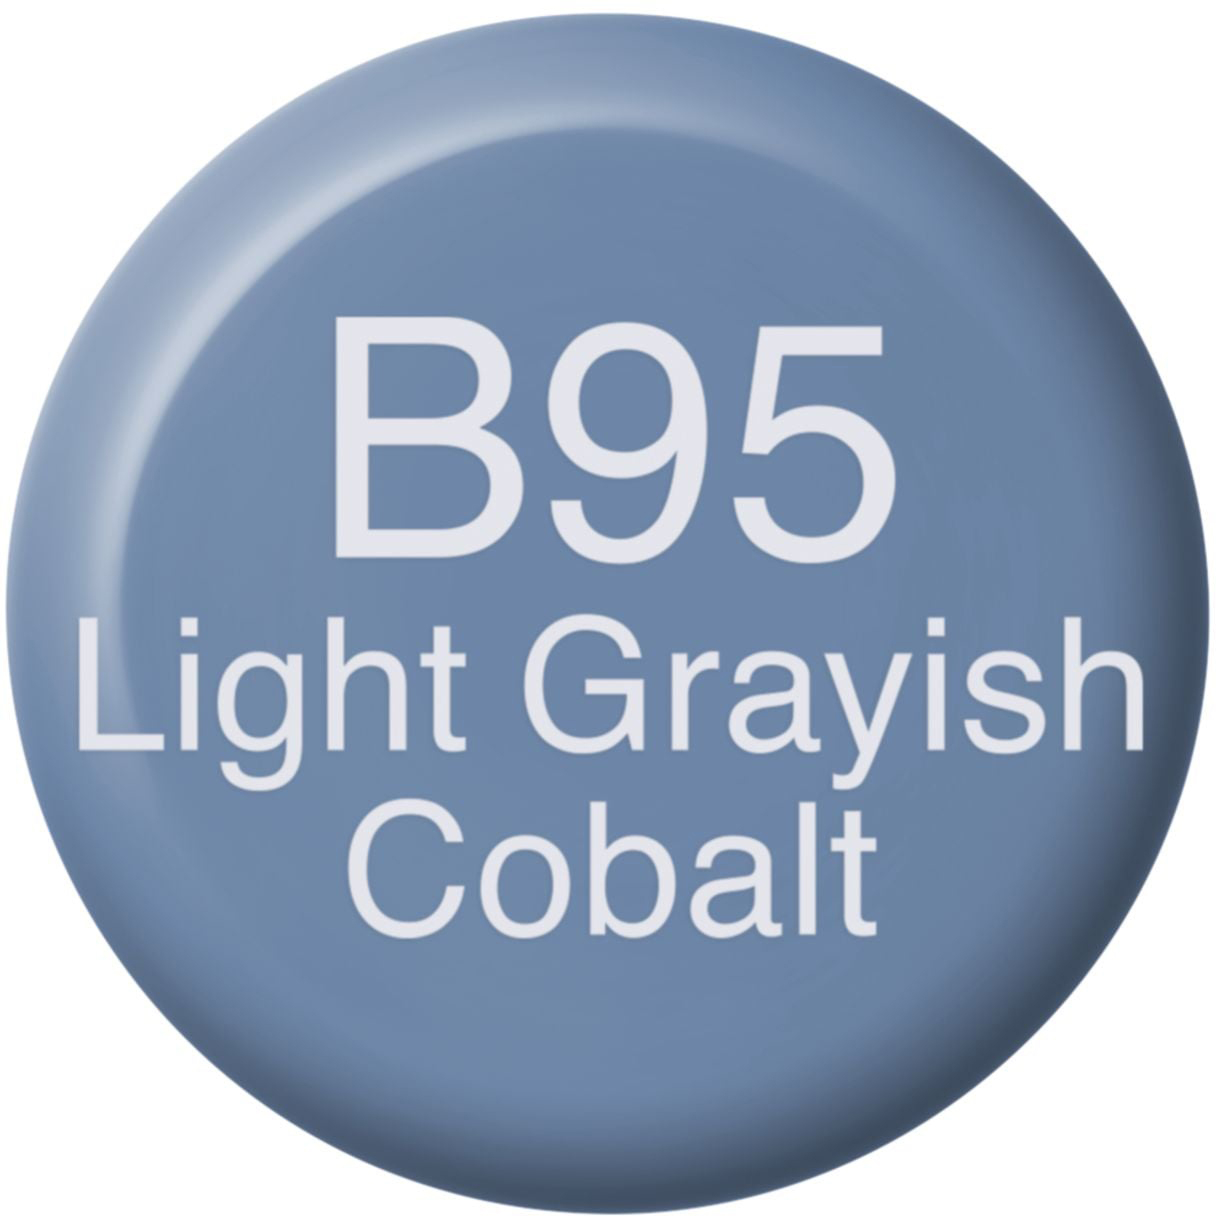 COPIC Ink Refill 21076156 B95 - Light Greyish Cobalt